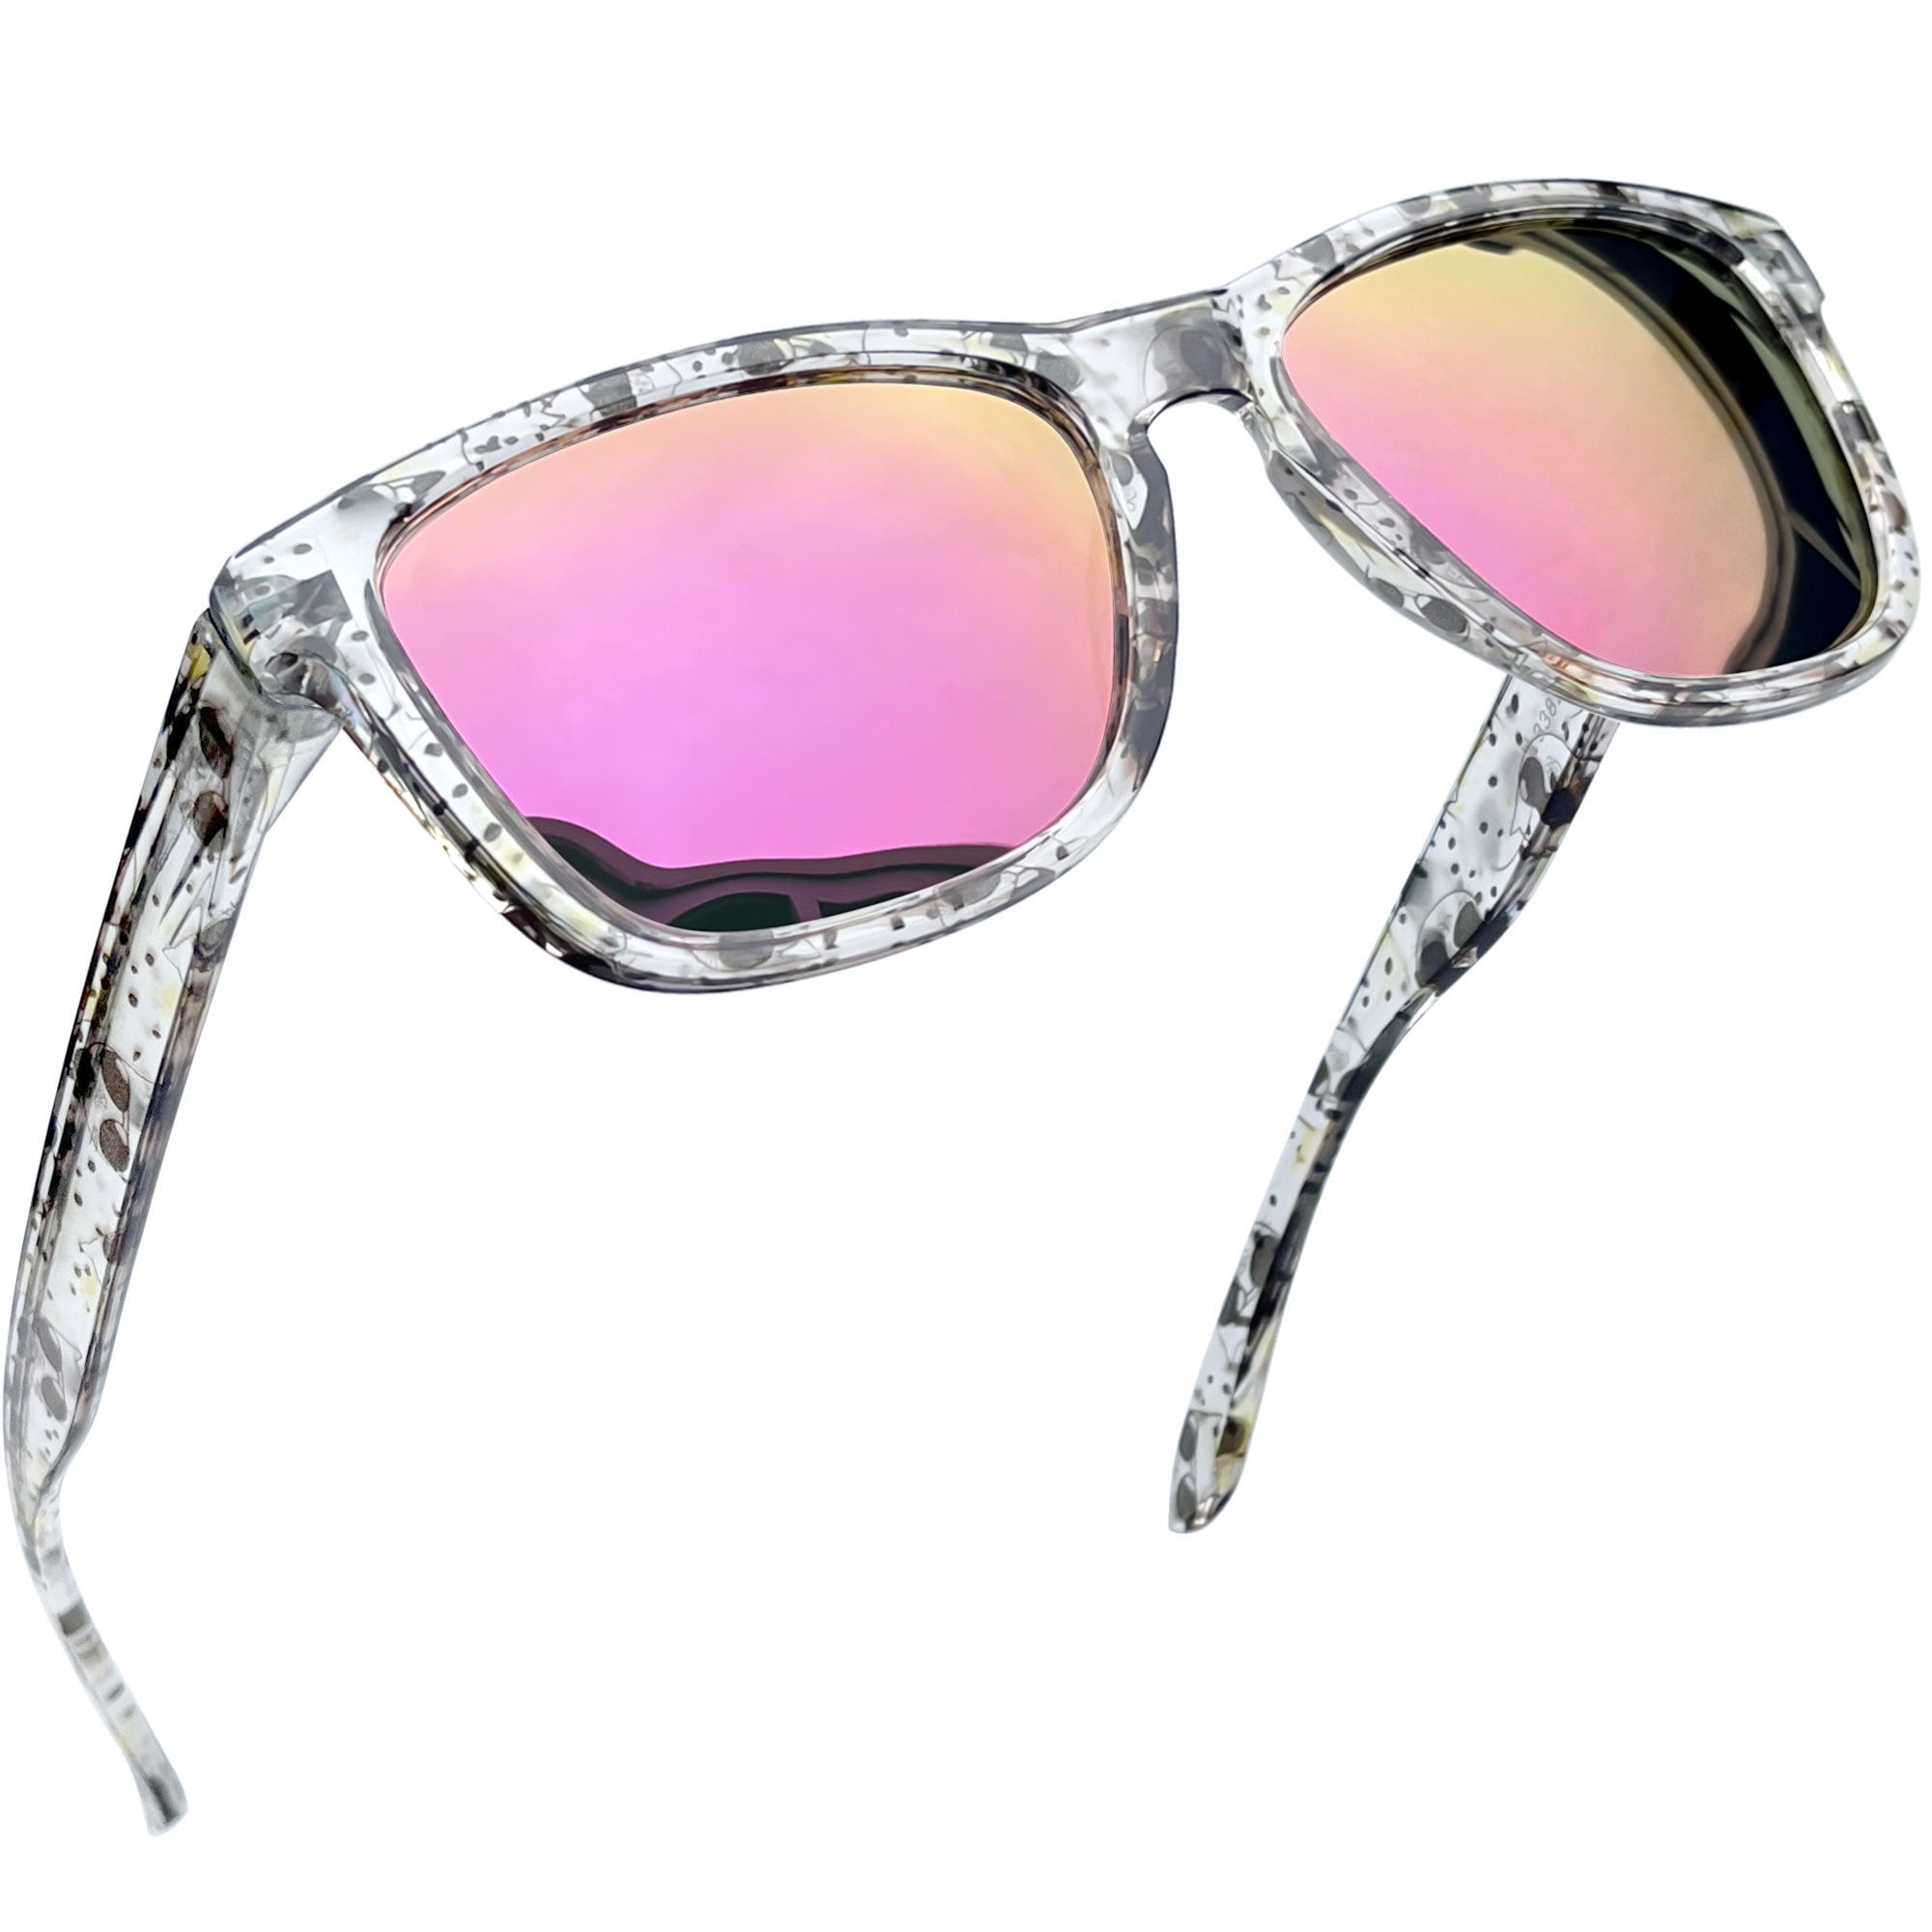 Vintage Polarized Steampunk Sunglasses Fashion Round Mirrored